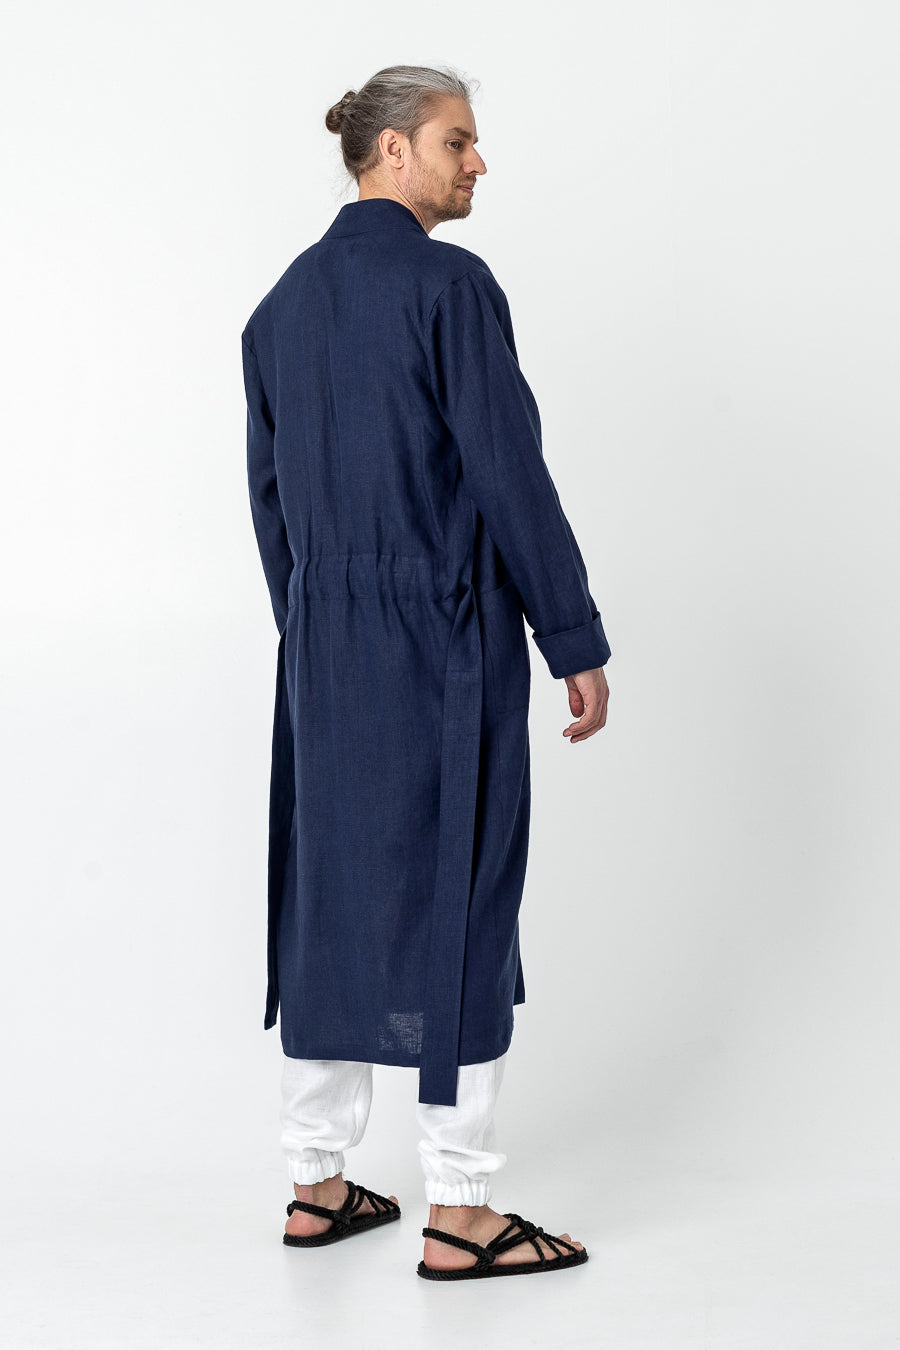 Long Linen Japanese Kimono Robe / Cardigan for Men / Grey